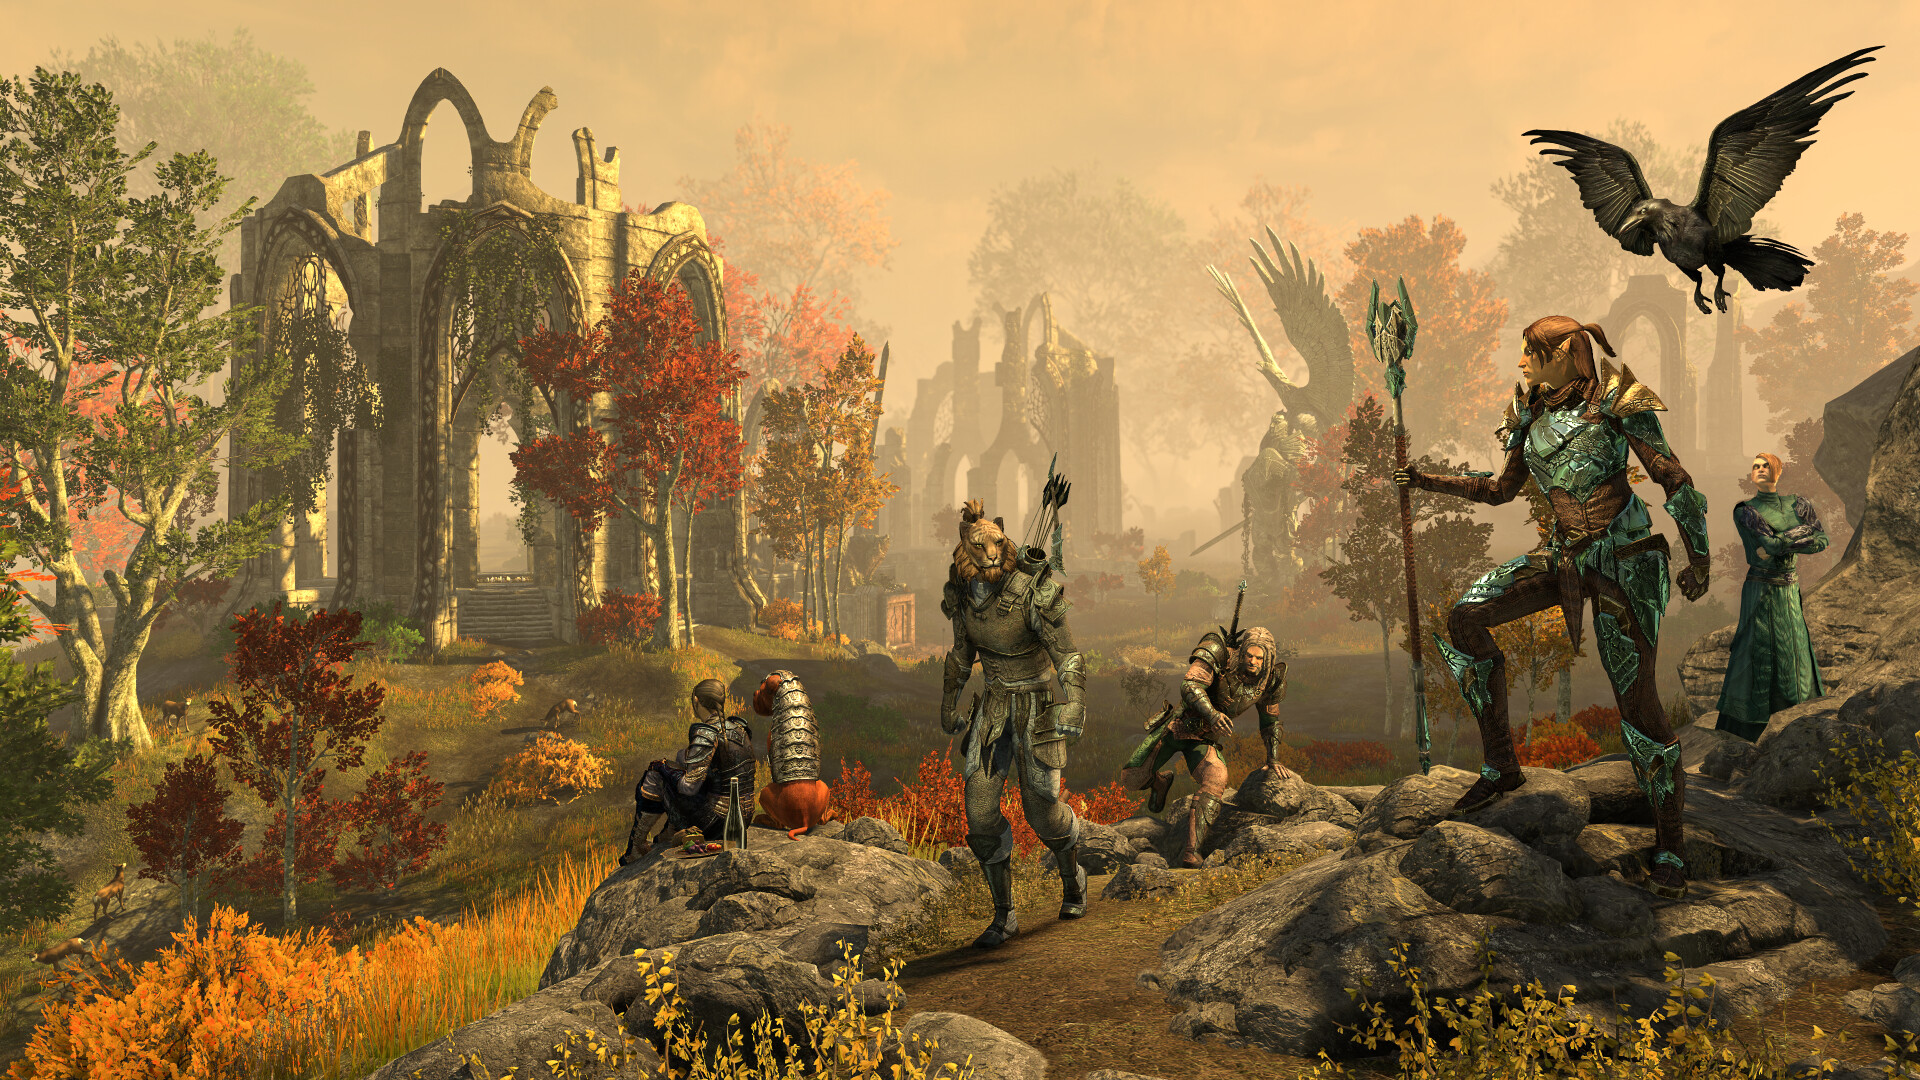 Hra na konzolu The Elder Scrolls Online Collection: Gold Road – Xbox Digital